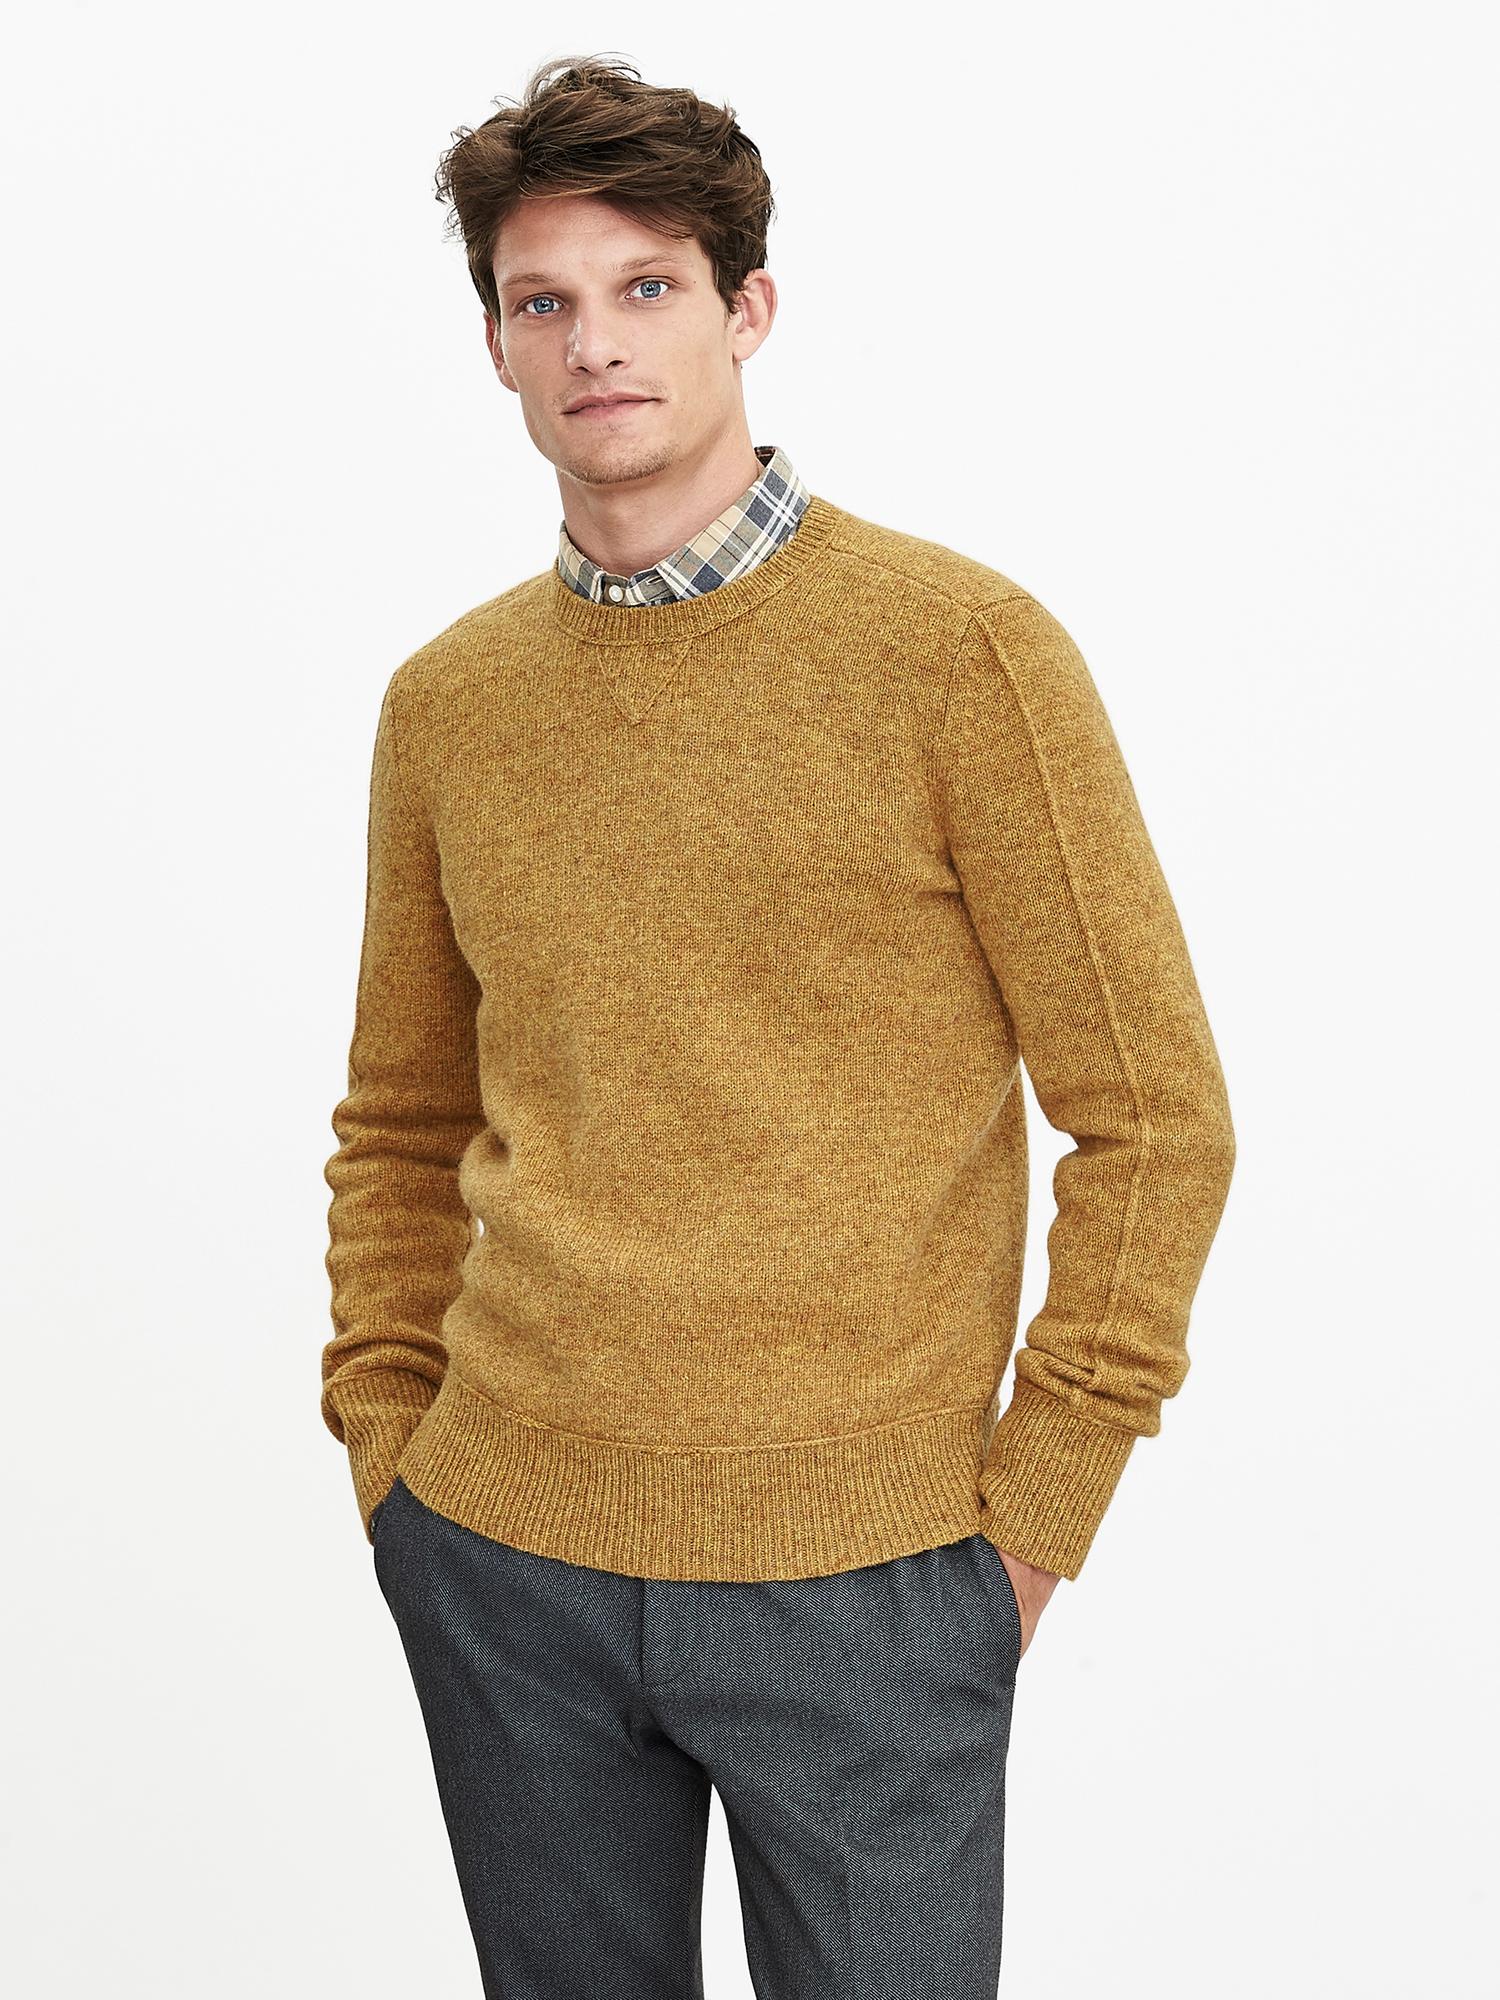 J.C. Rennie & Co. Shetland Wool Sweater Pullover